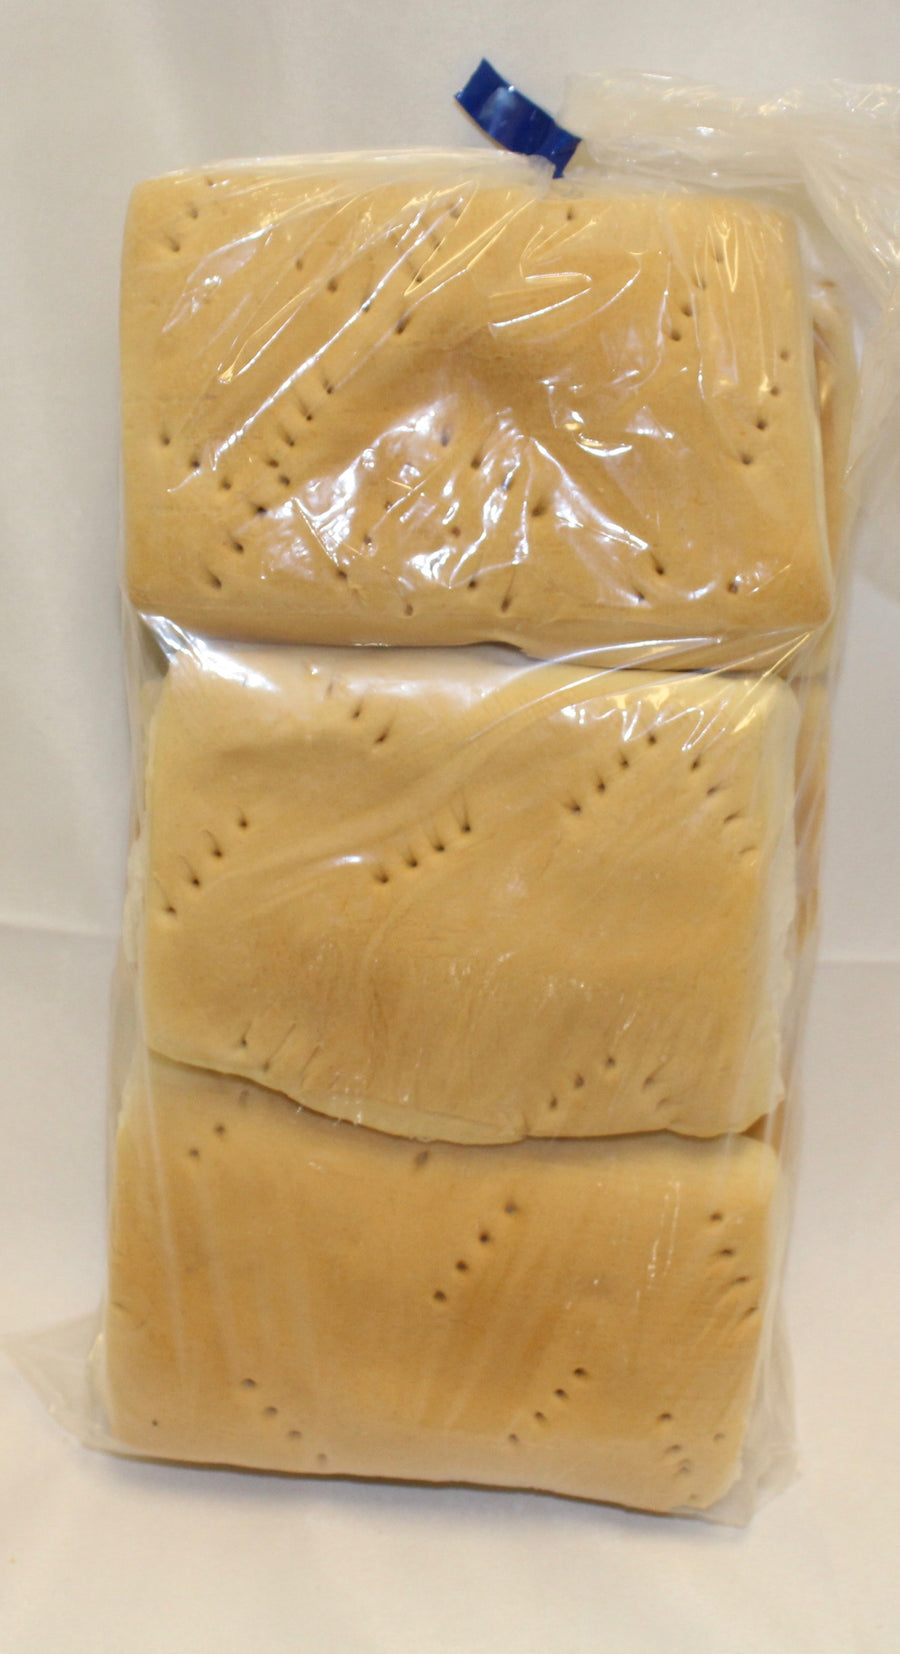 Haitian Bread - [Eurysmarket]